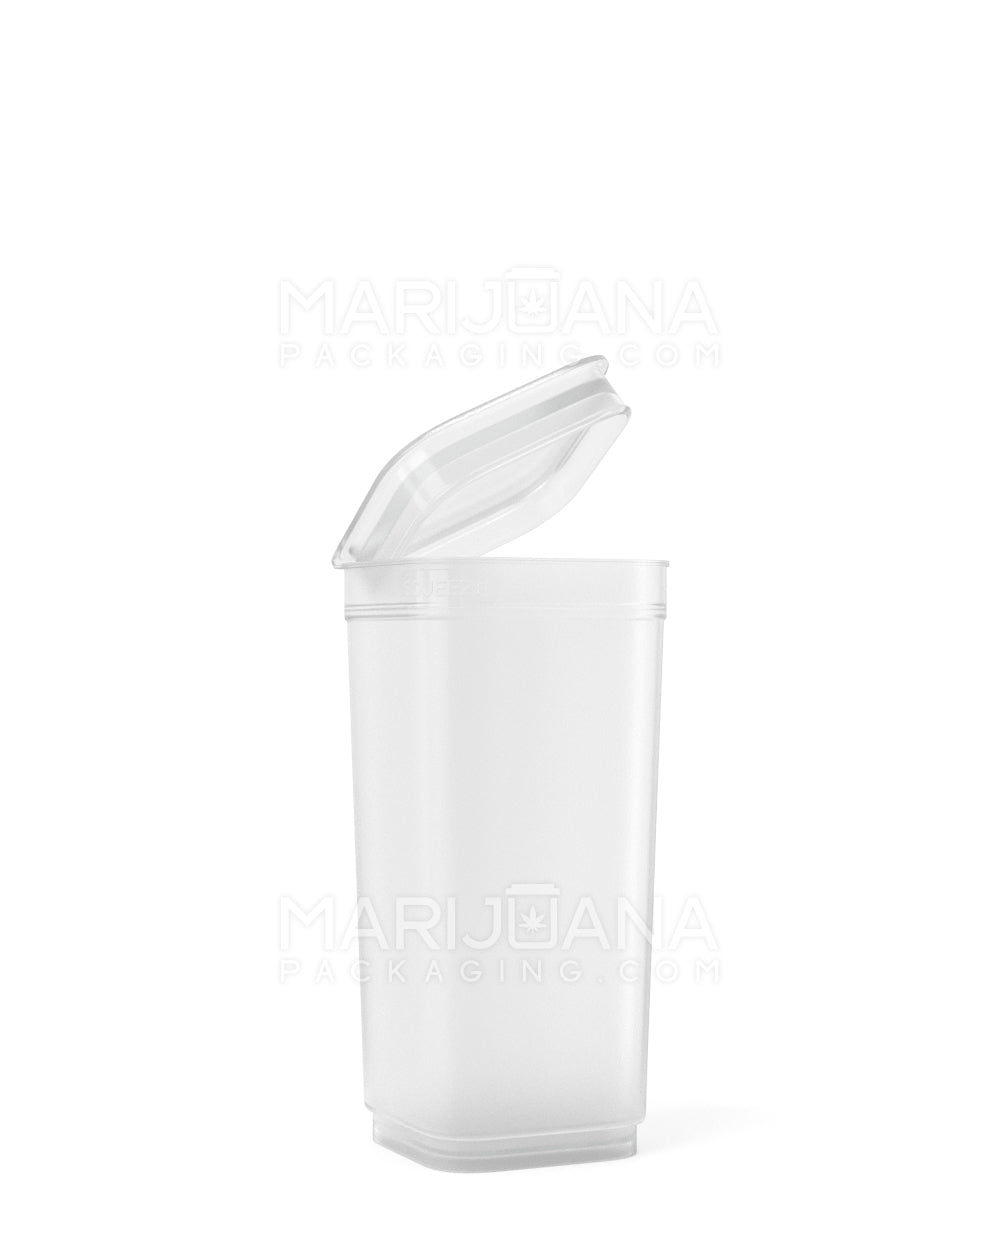 POLLEN GEAR | Child Resistant 100% Recyclable Transparent Clear Pop Box Pop Top Bottles | 30dr - 7g - 373 Count